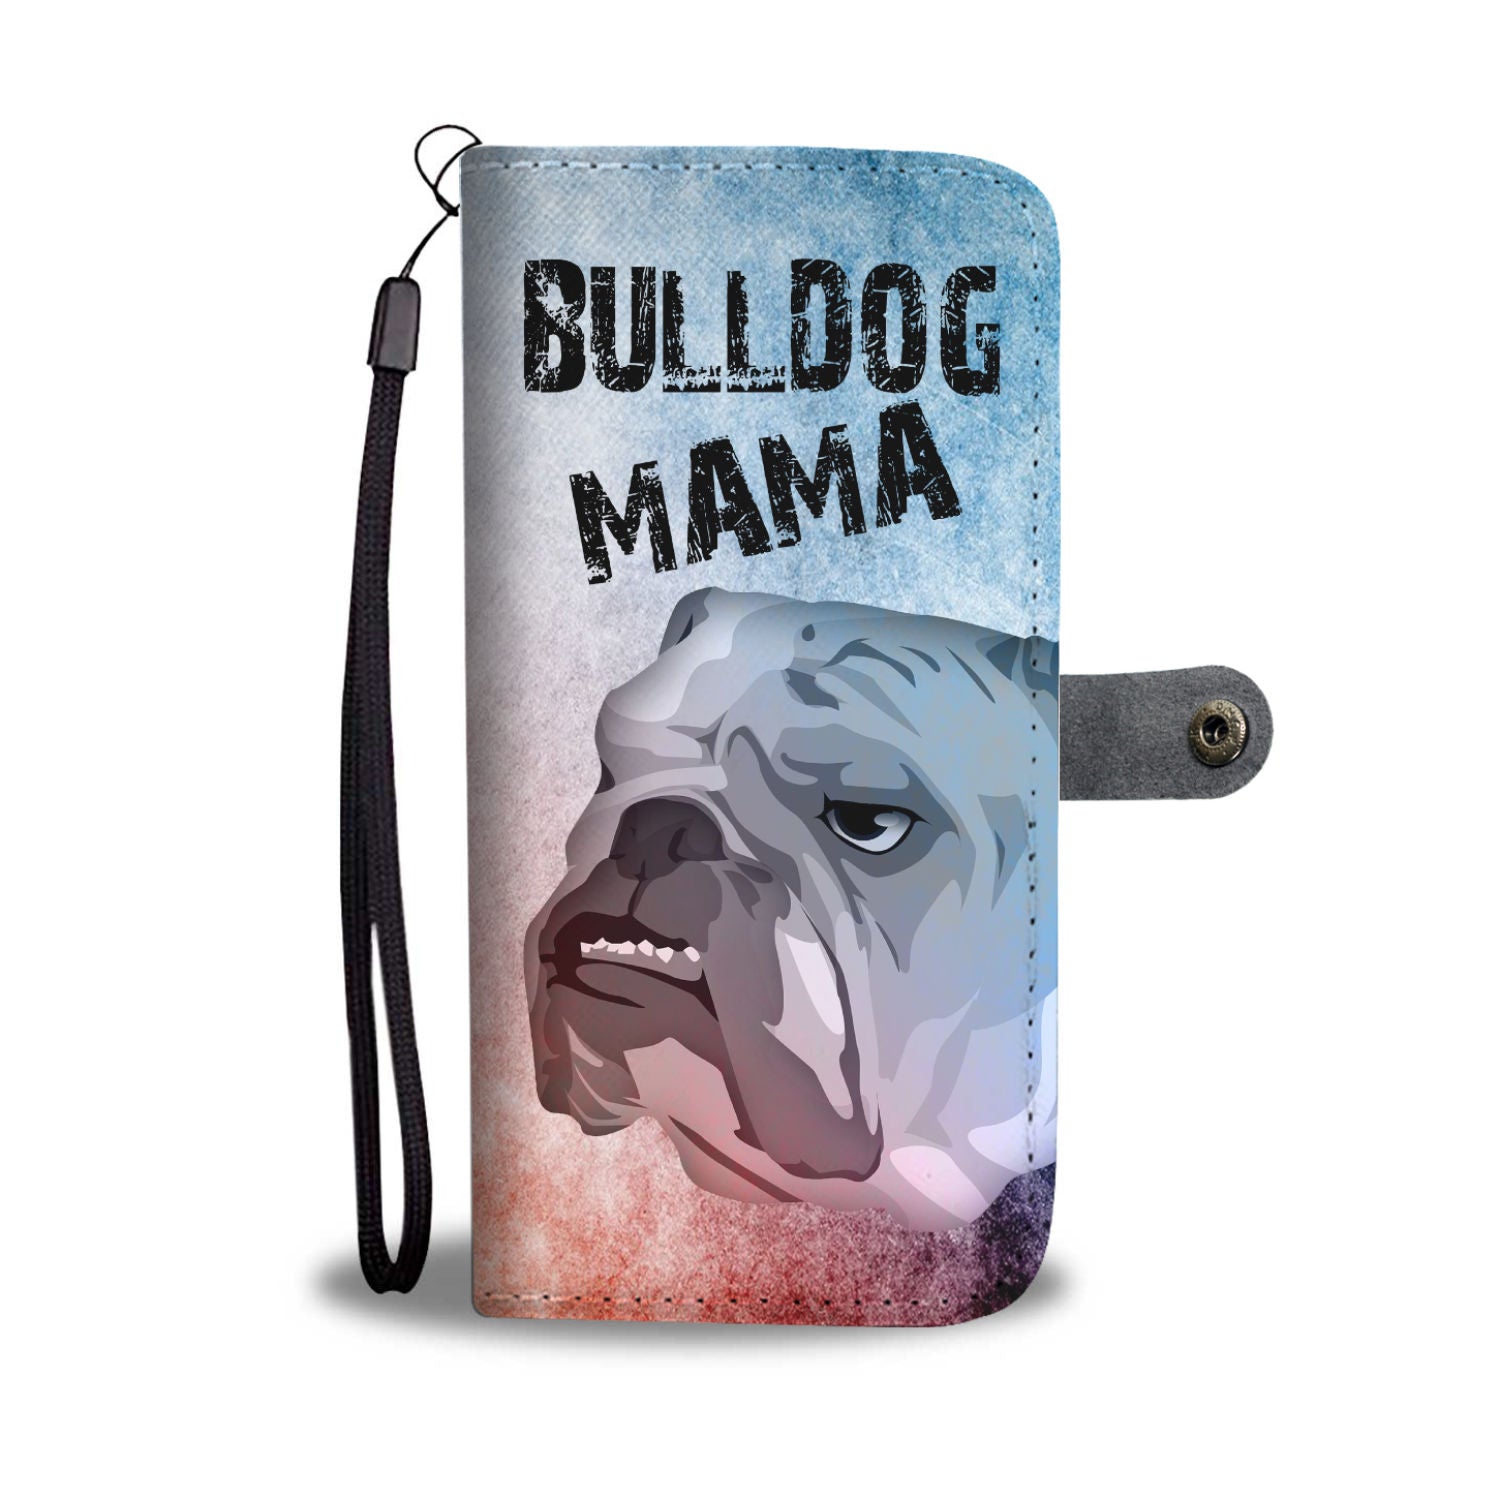 Bulldog Mama Wallet Case